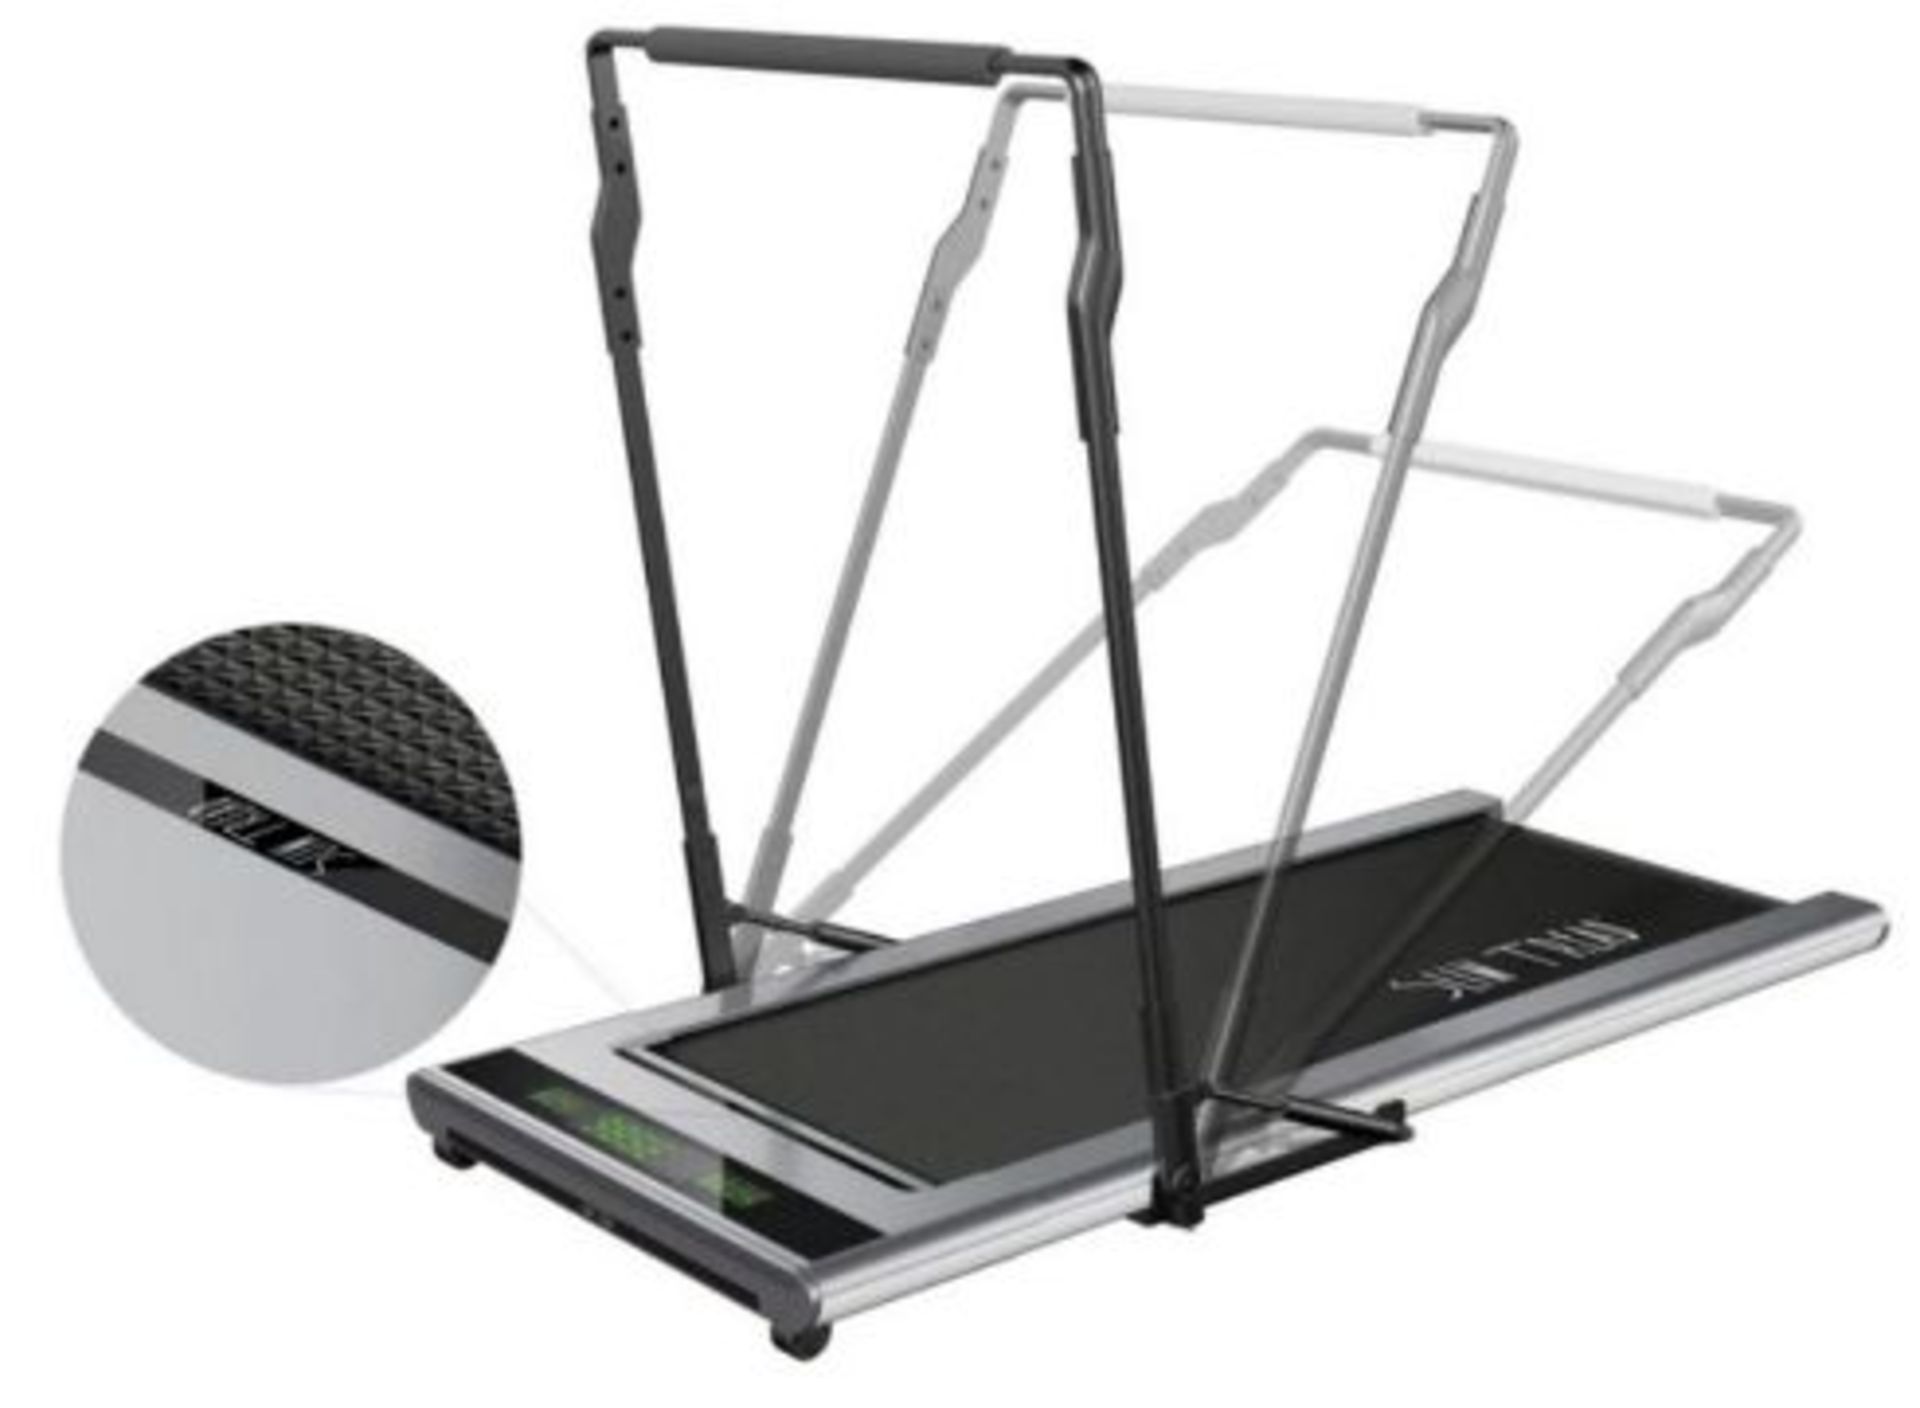 1 x Slim Tread Ultra Thin Smart Treadmill Running / Walking Machine - Lightweight With Folding - Image 4 of 6